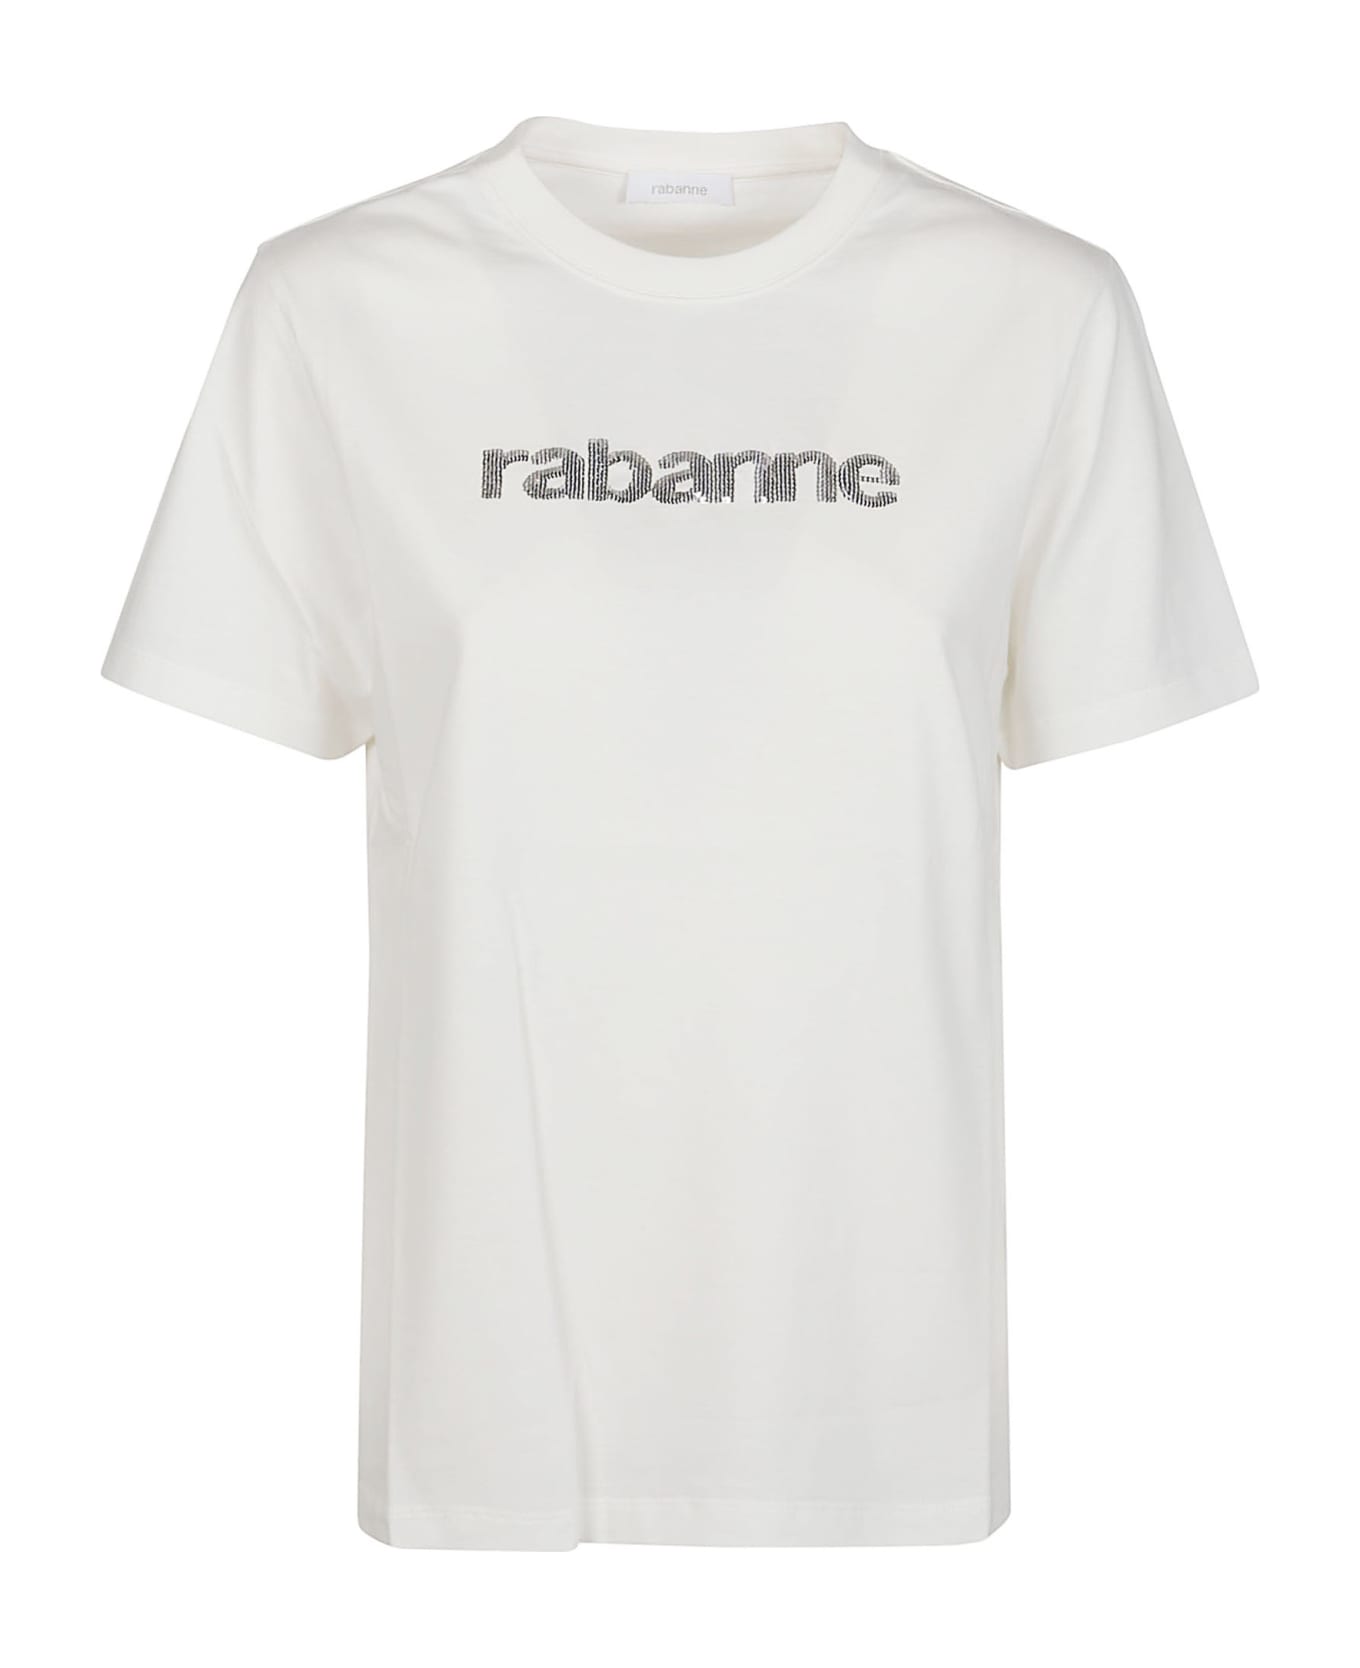 Paco Rabanne T-shirt - Coconut Milk